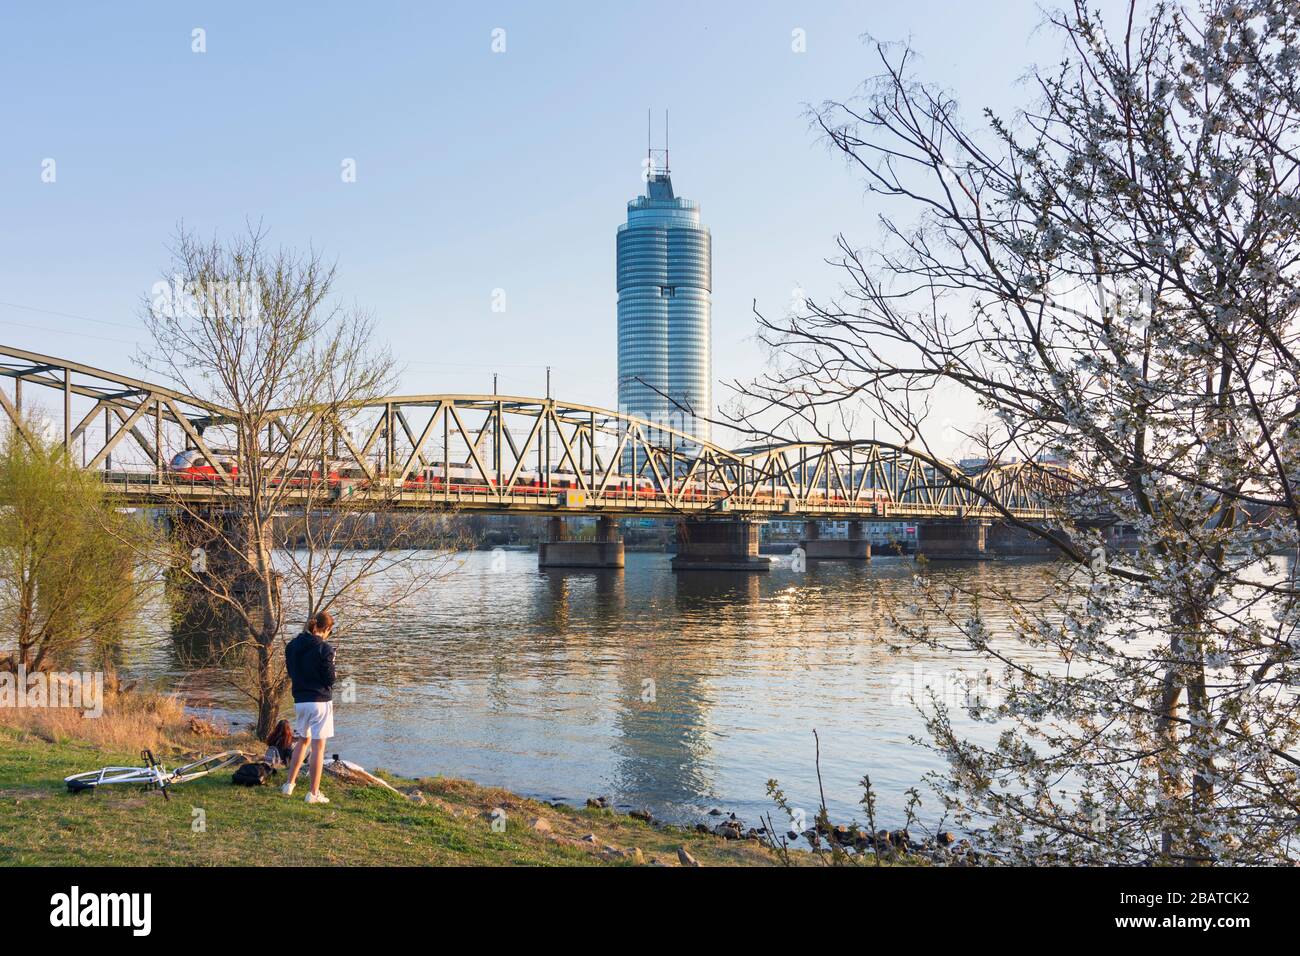 Wien, Vienna: fiume Donau (Danubio), Millennium Tower, ponte ferroviario Nordbahnbrücke, fioritura dei ciliegi, nel 20. Brigittenau, Vienna, Austria Foto Stock